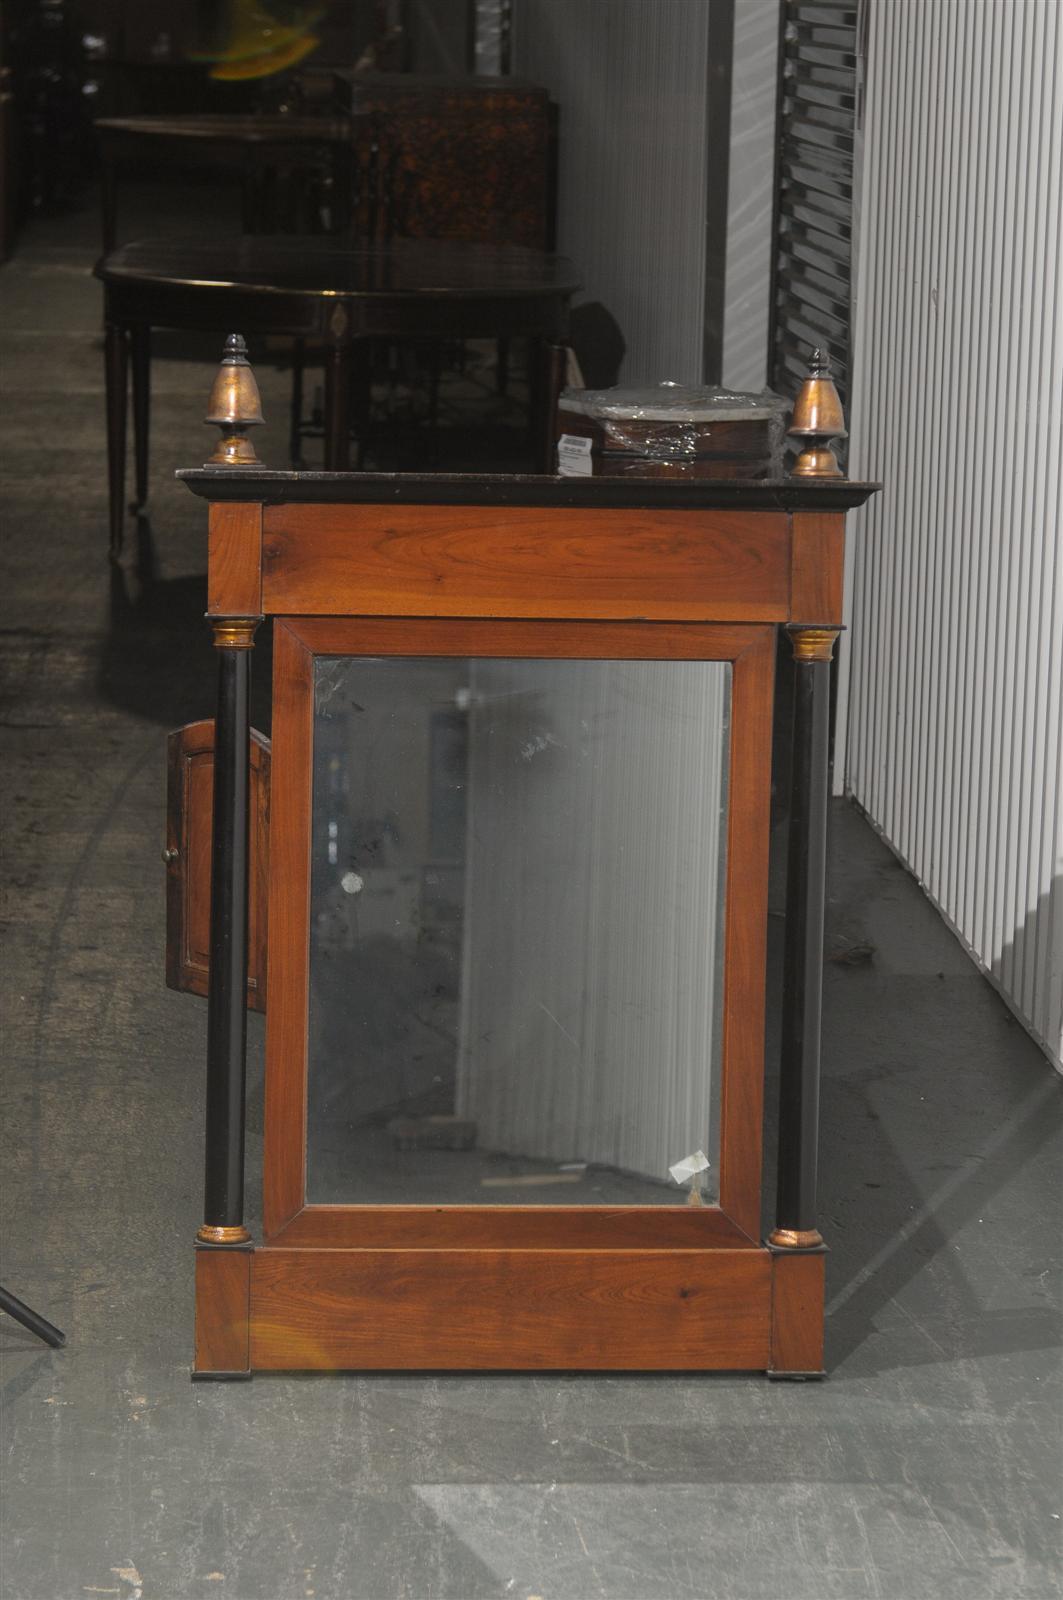 19th-20th century continental wood mirror.